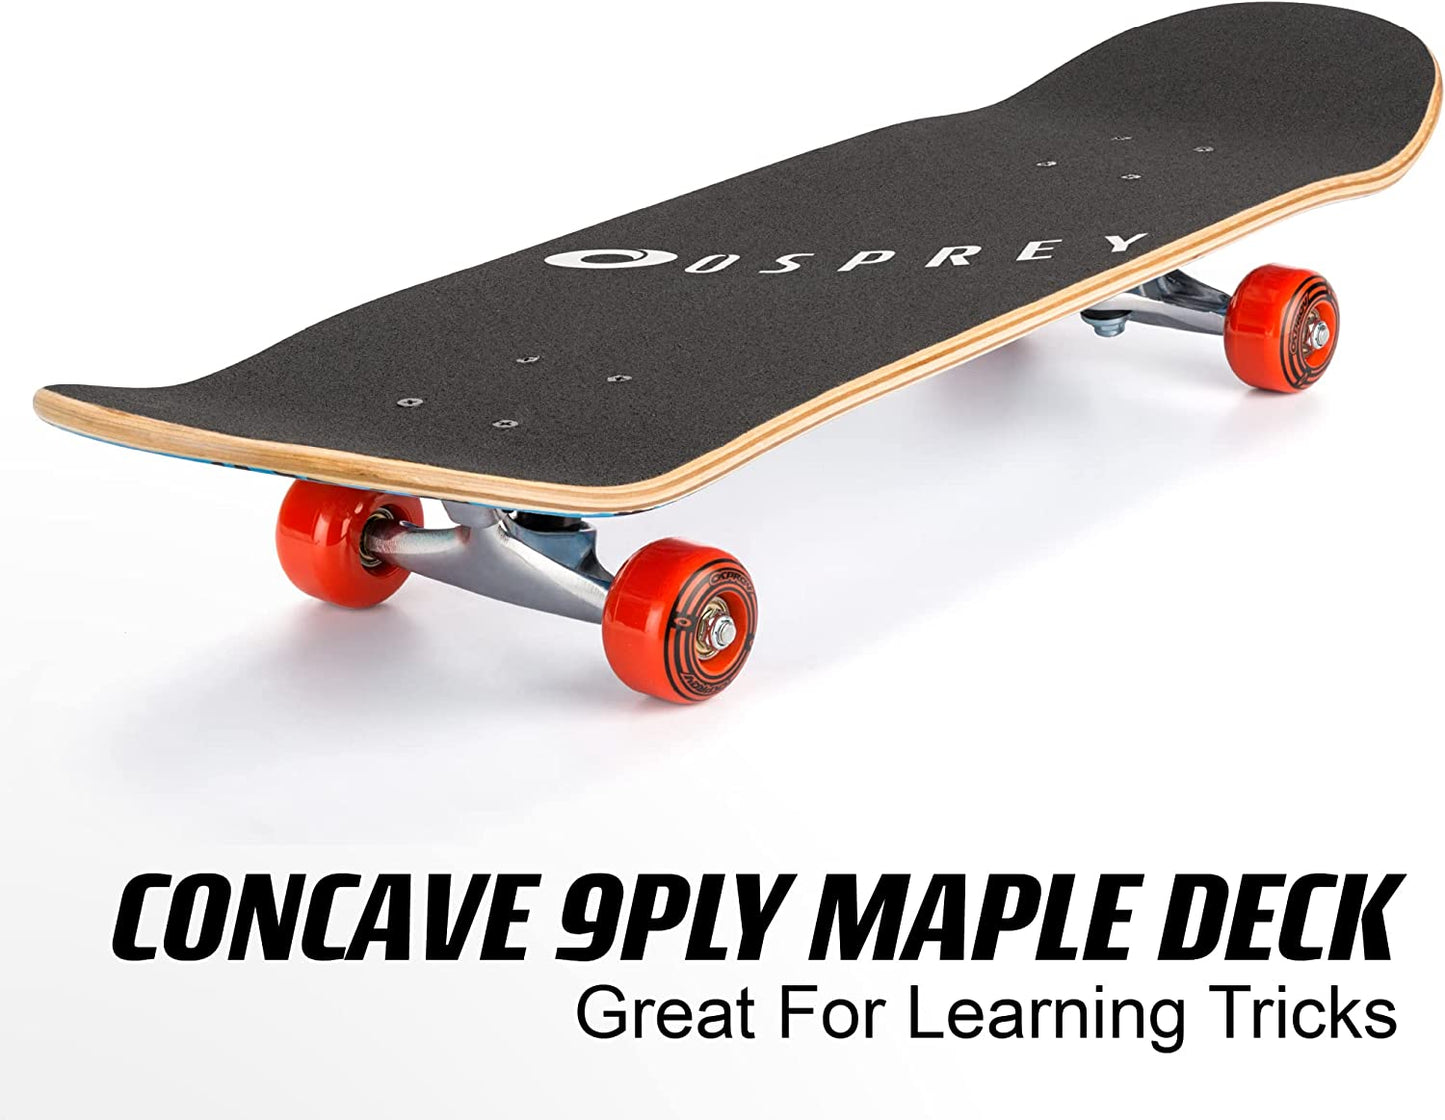 Osprey Kids Skateboard, 31 x 8 Inch Double Kick Skateboard for Beginners with Maple Deck, Boys & Girls - Repeat